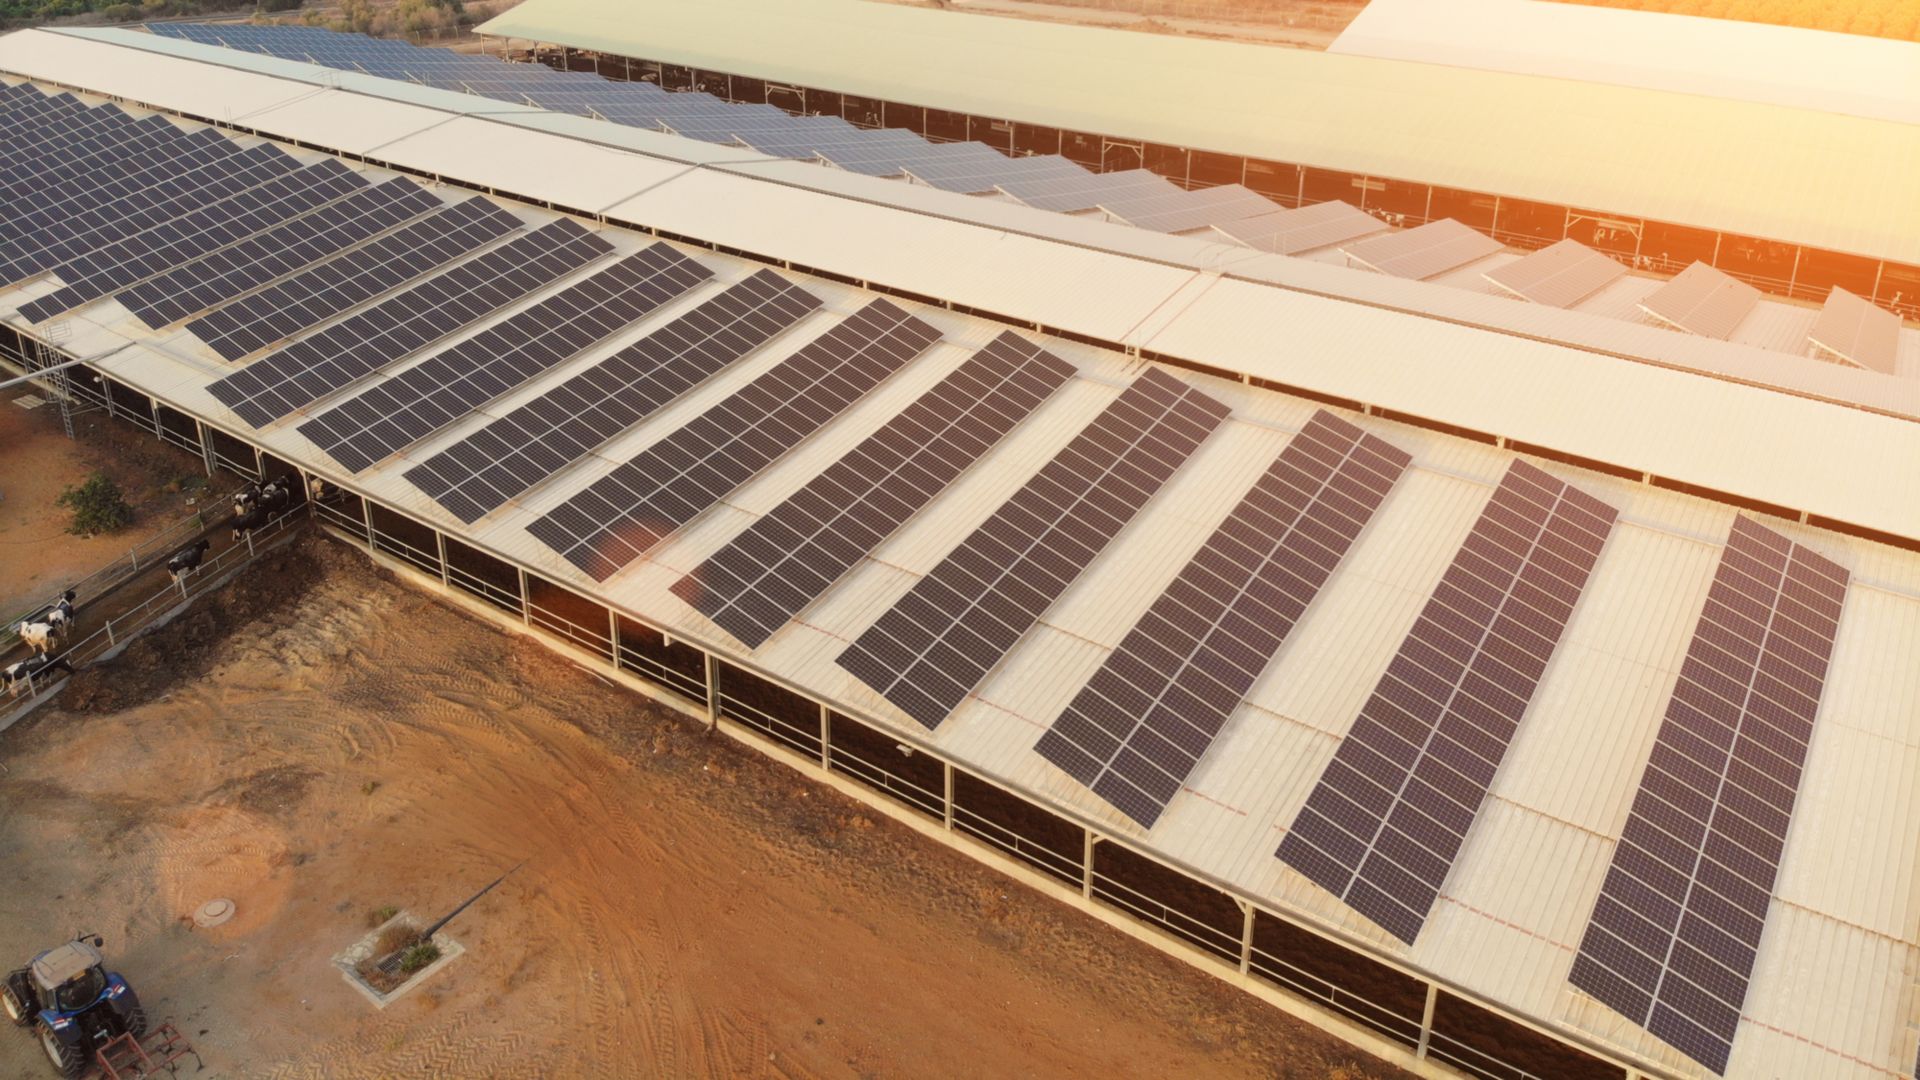 Solar panels renewable energy aerial view